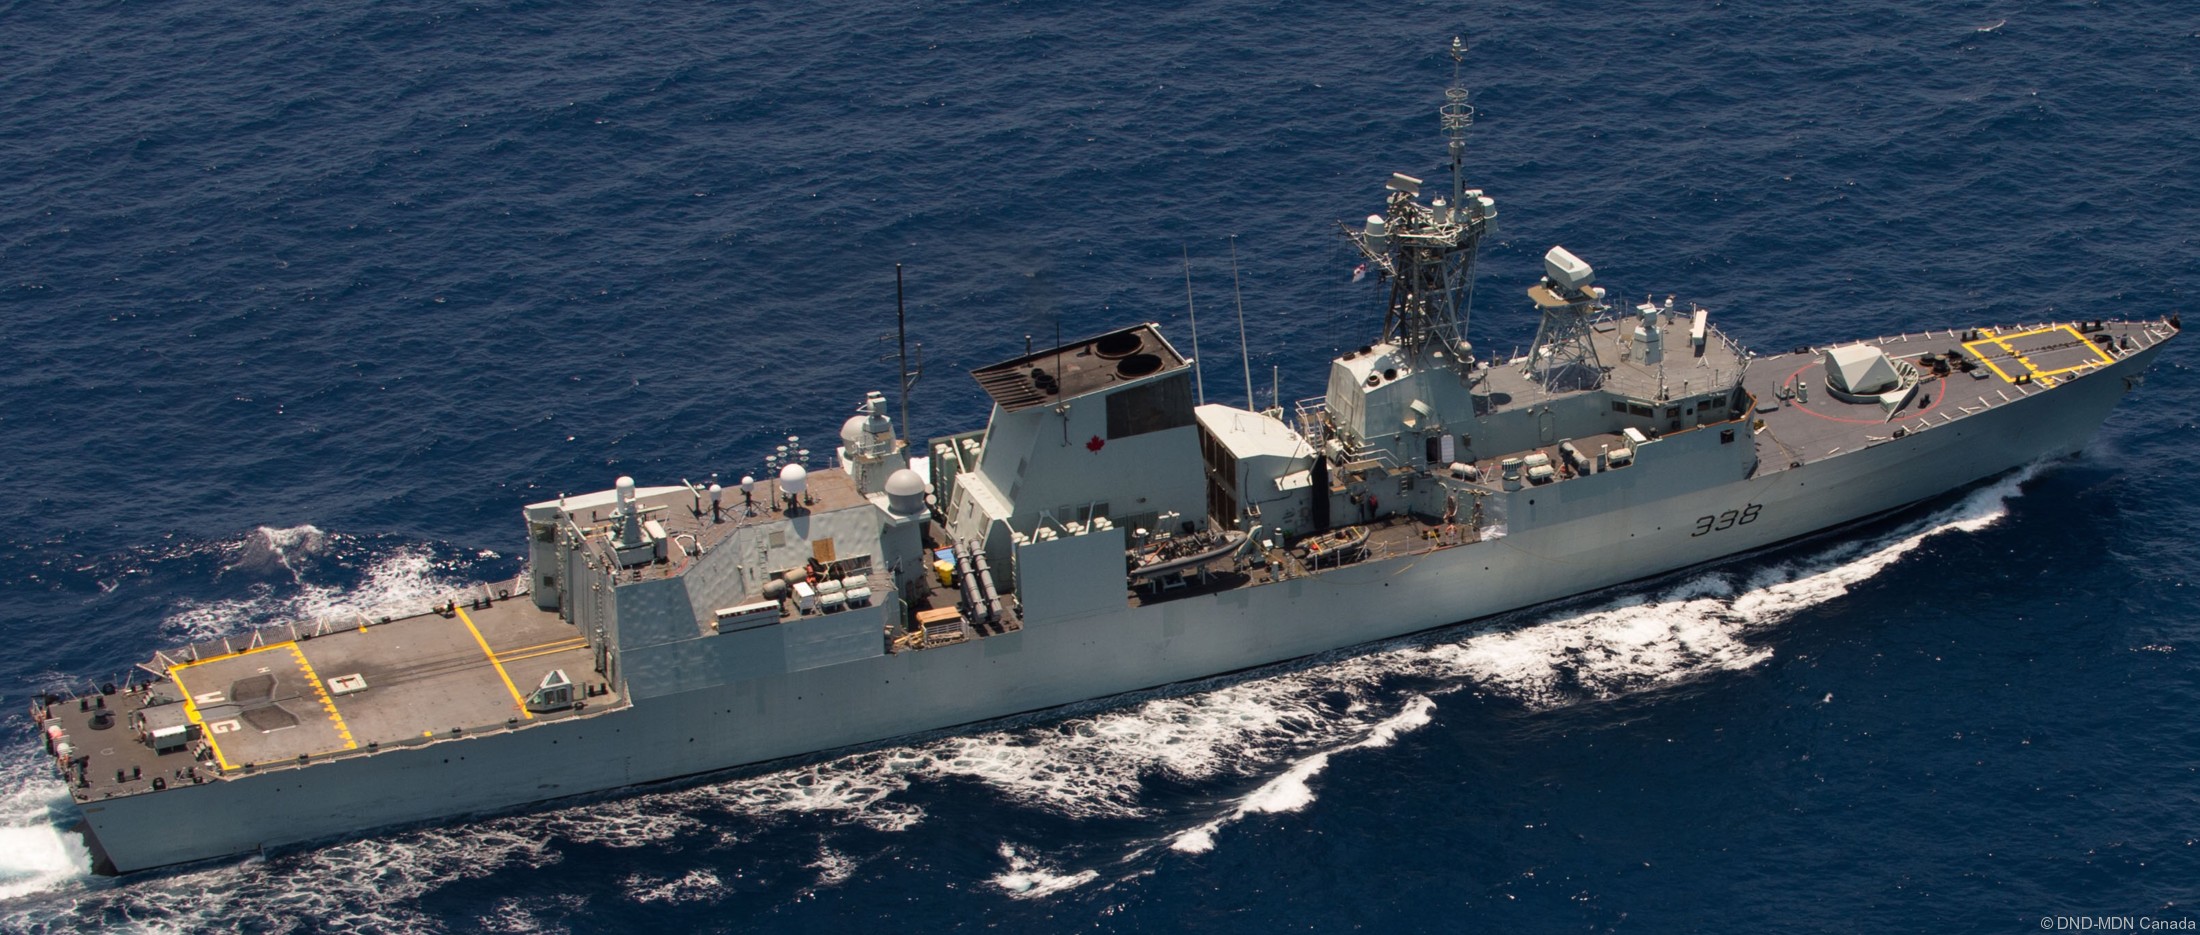 ffh-338 hmcs winnipeg halifax class helicopter patrol frigate ncsm royal canadian navy 57